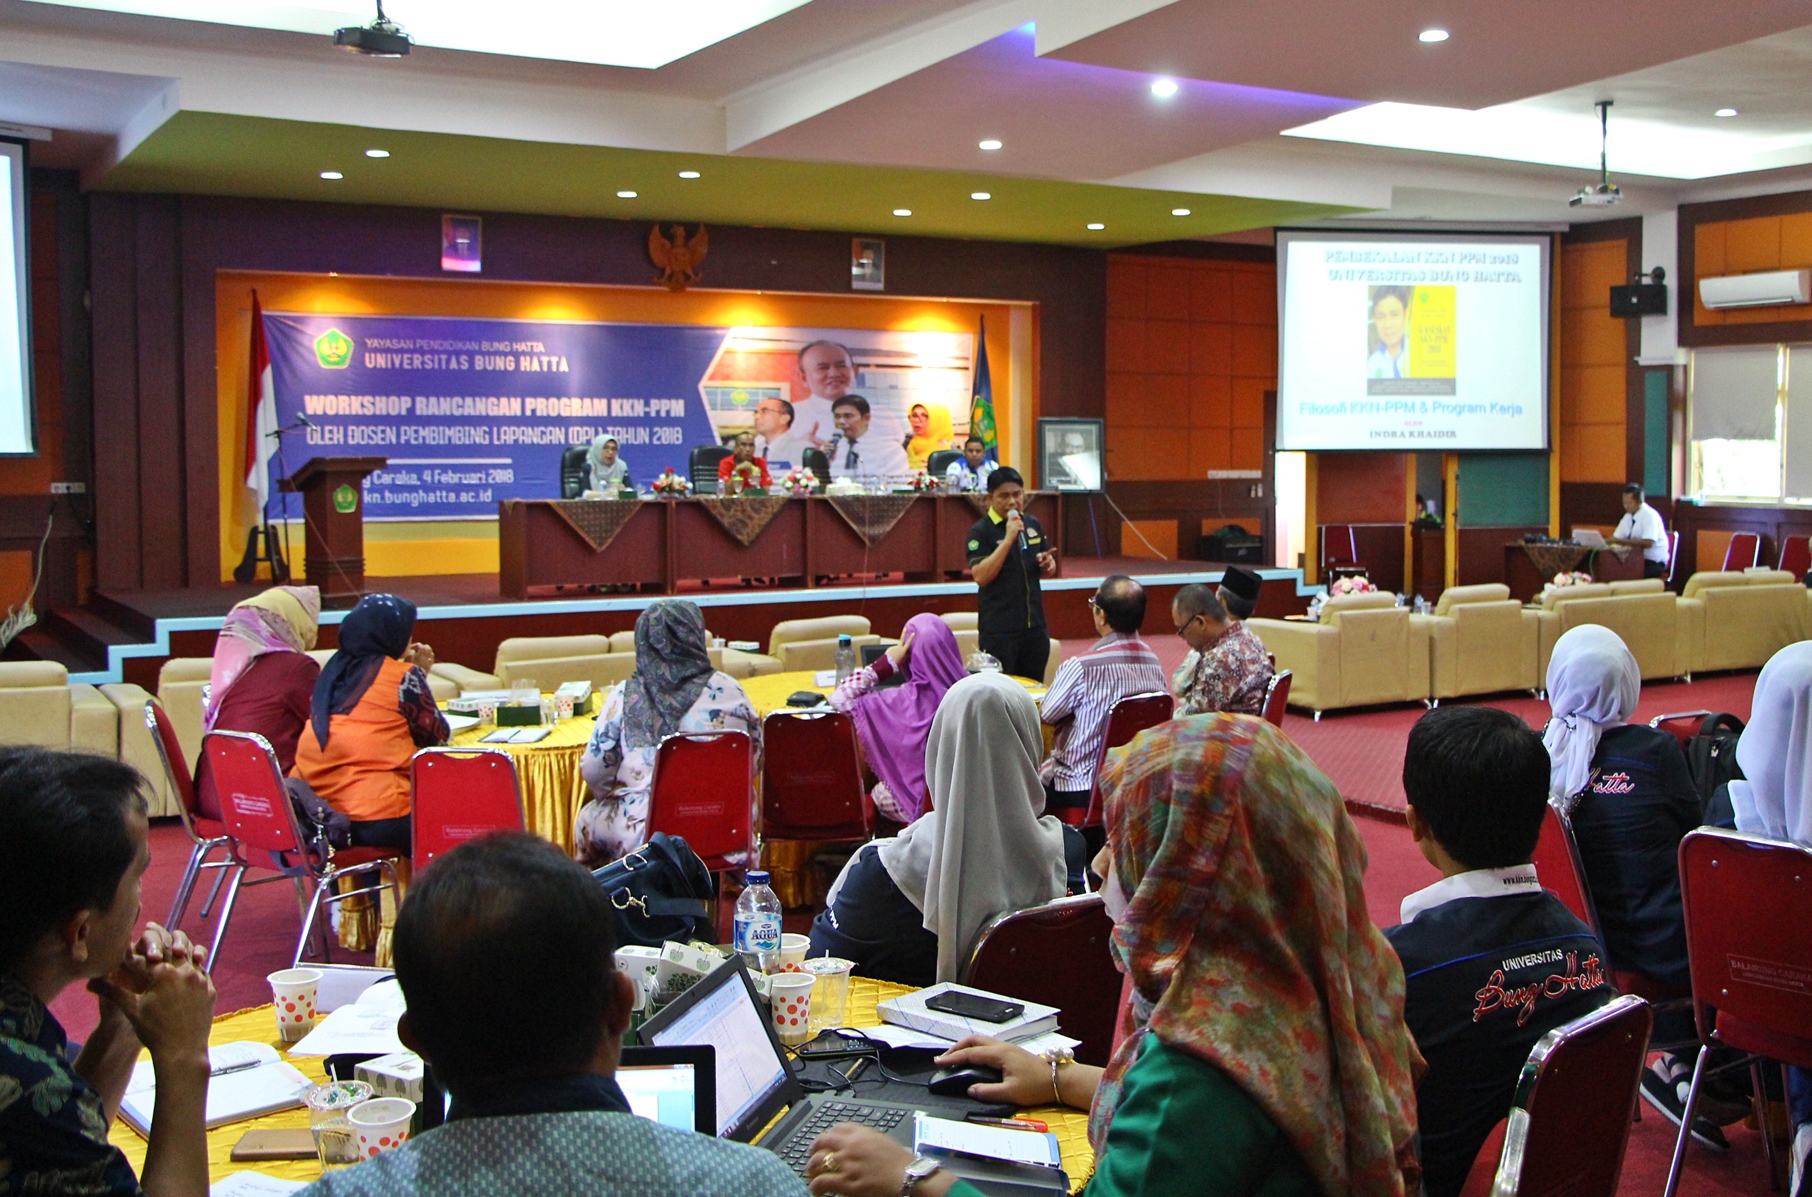 Universitas Bung Hatta Adakan Workshop Rancangan Program KKN-PPM Tahun 2018